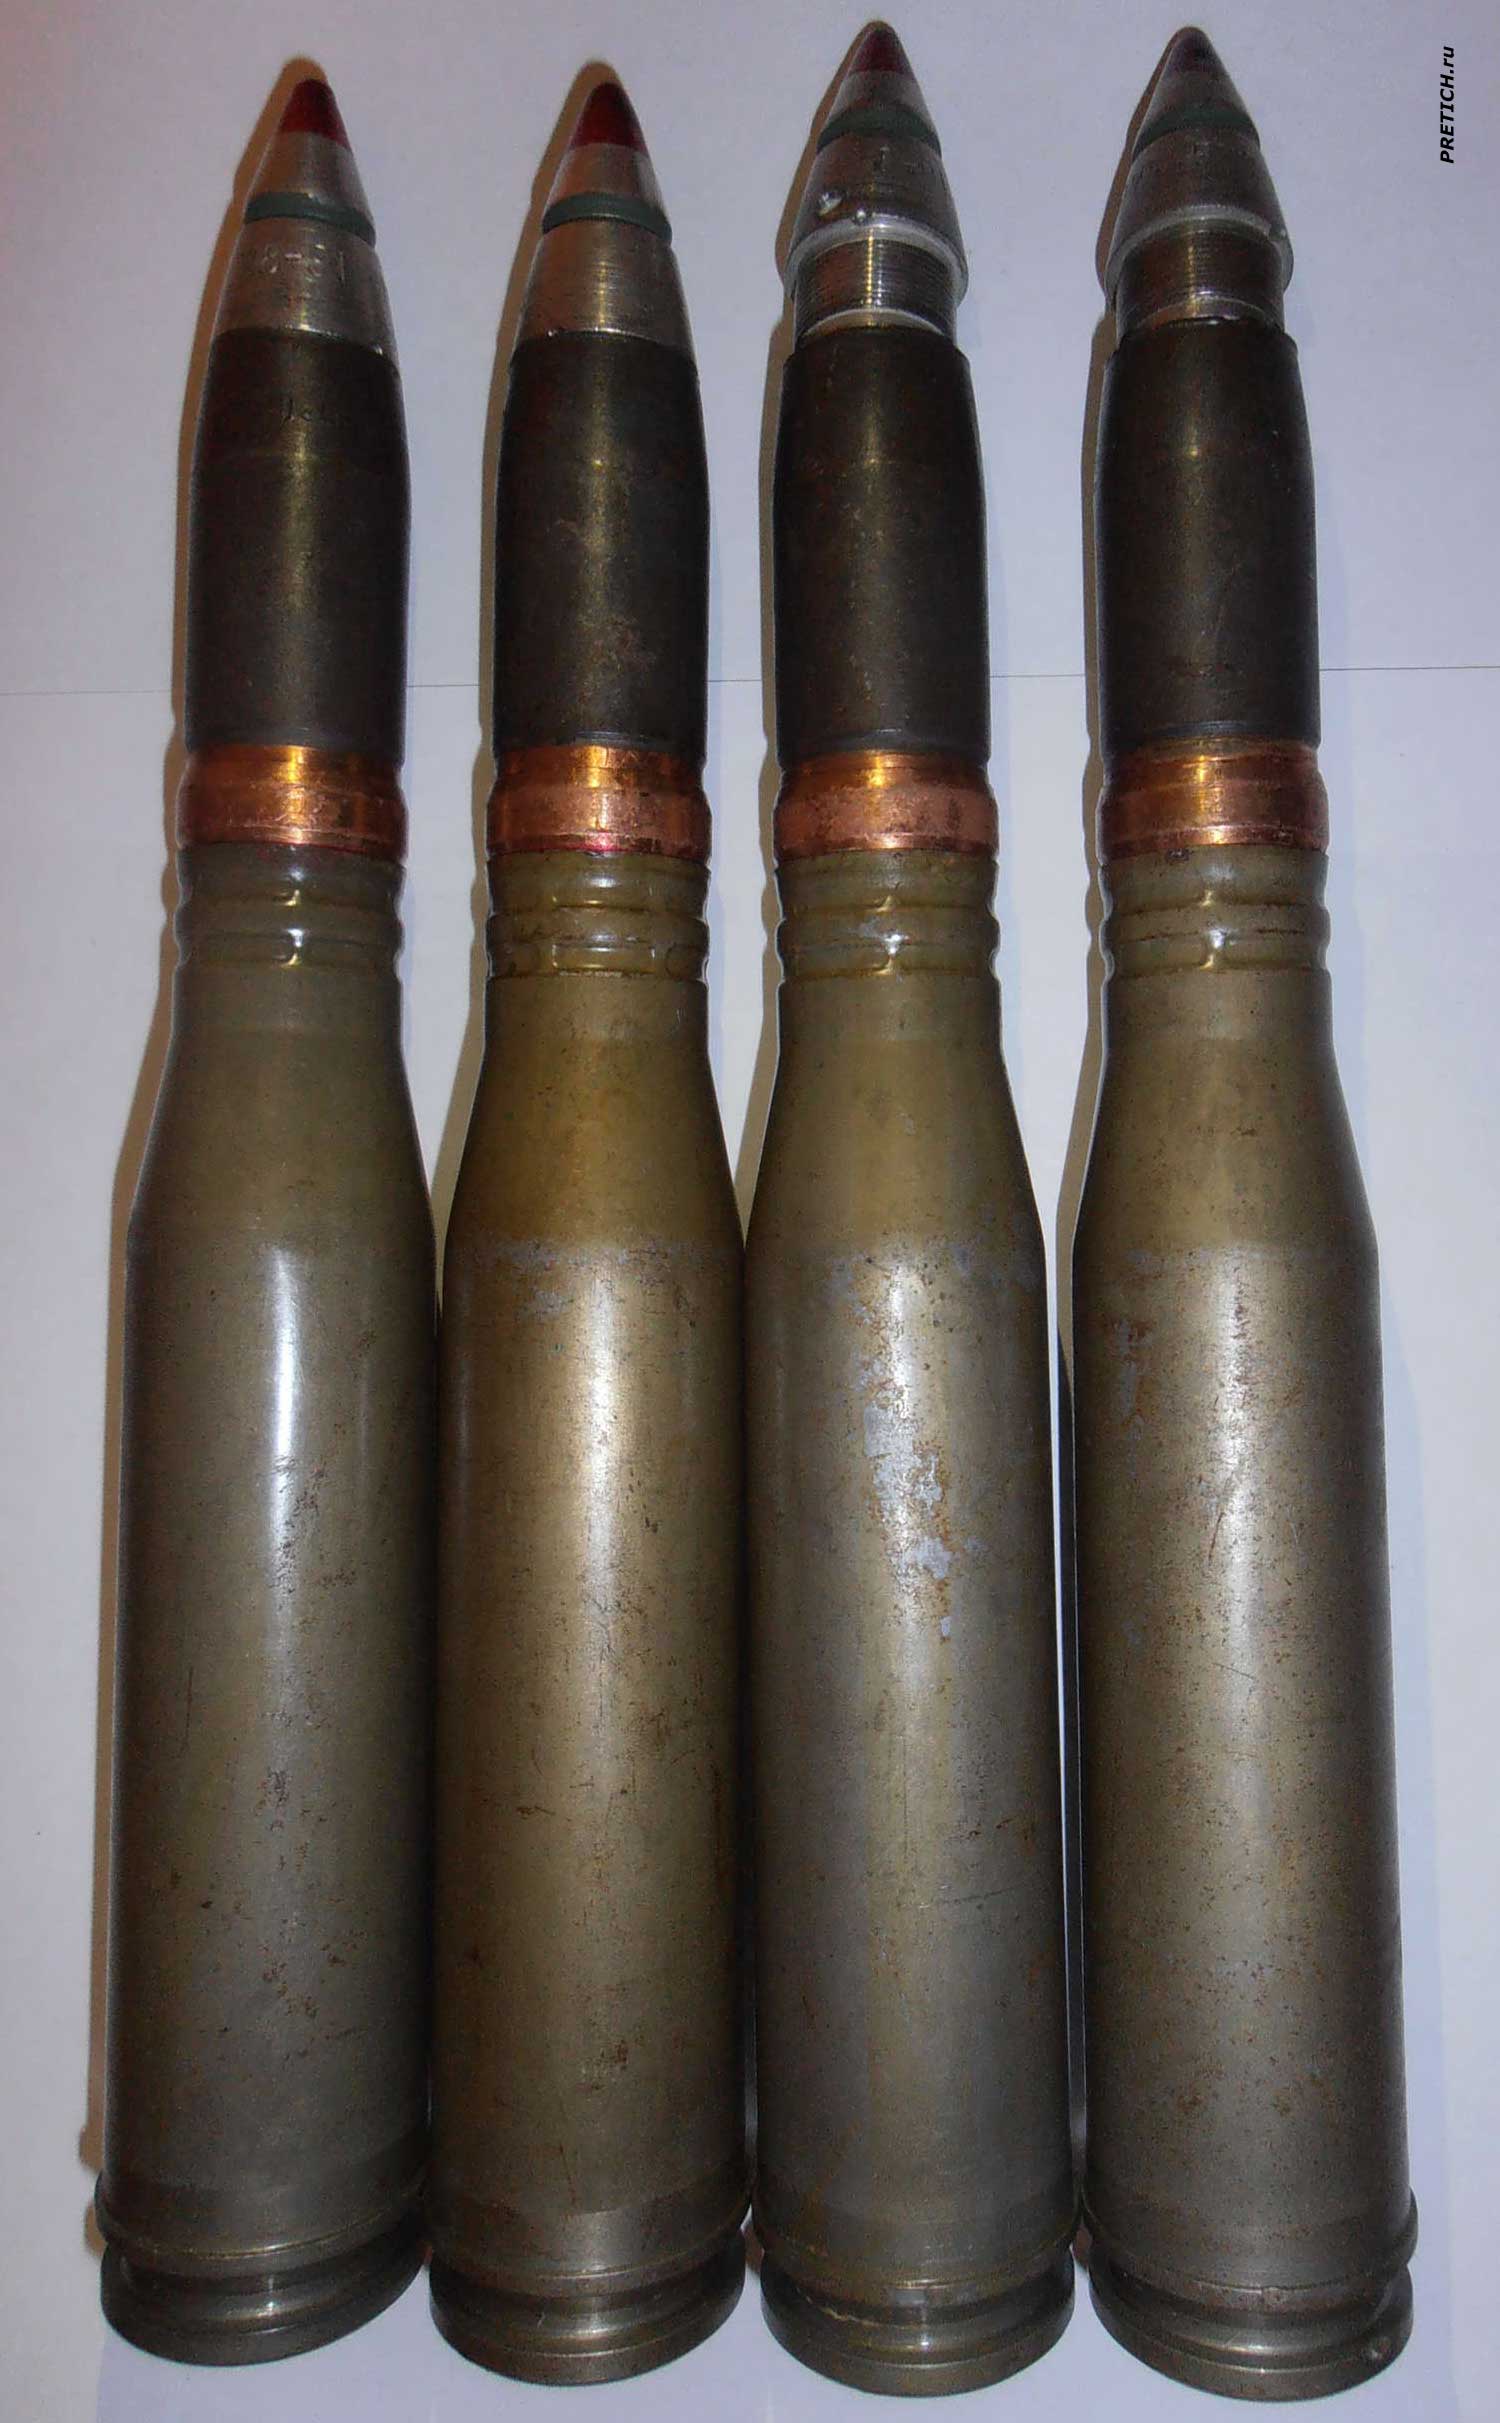 ЗСУ-23-4 "Шилка" боеприпасы к пушкам